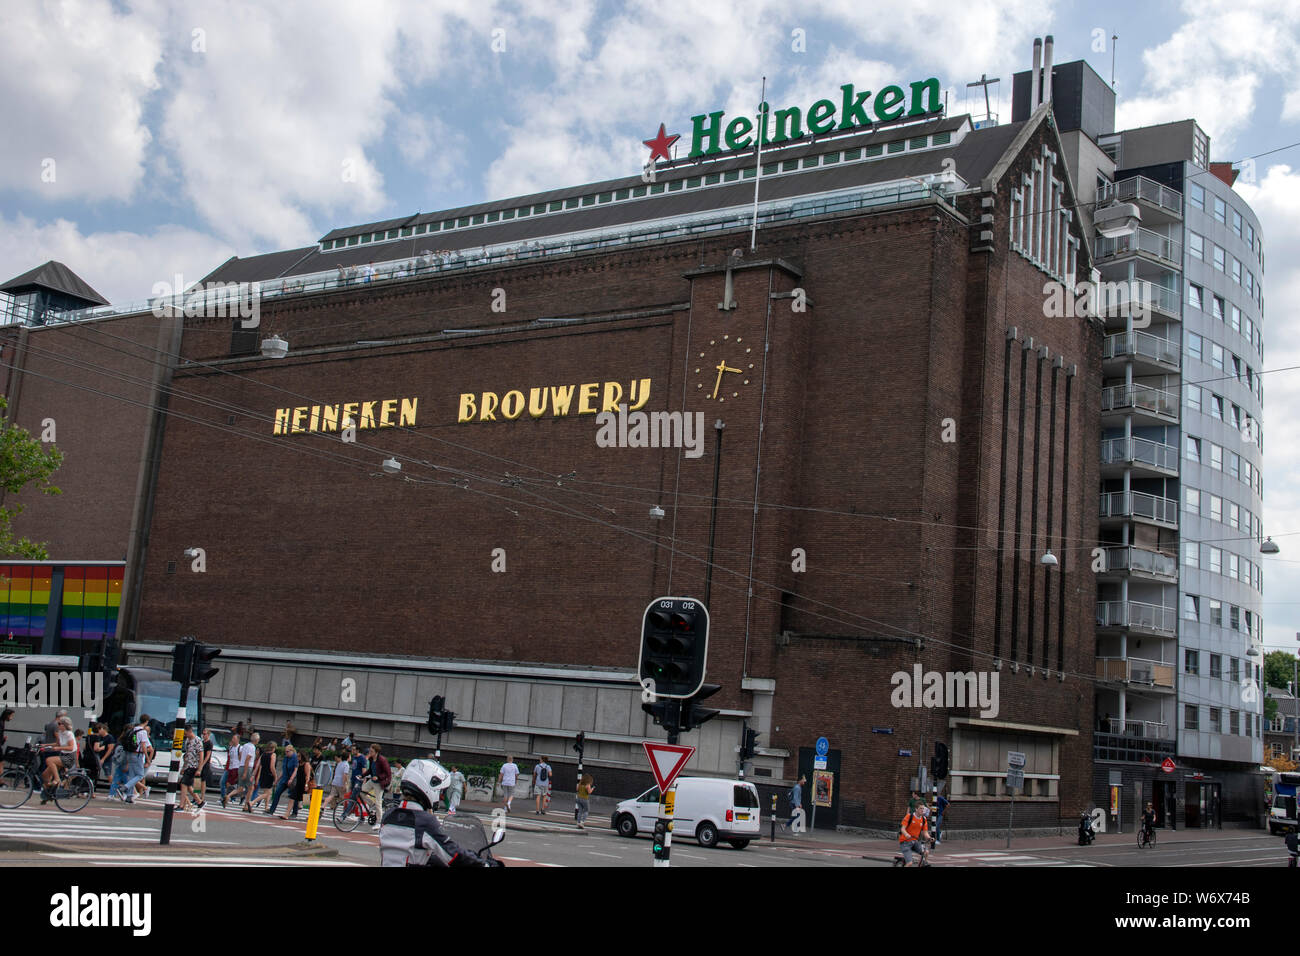 Heineken Beer Company Building At Amsterdam The Netherlands 2019 Stock Photo